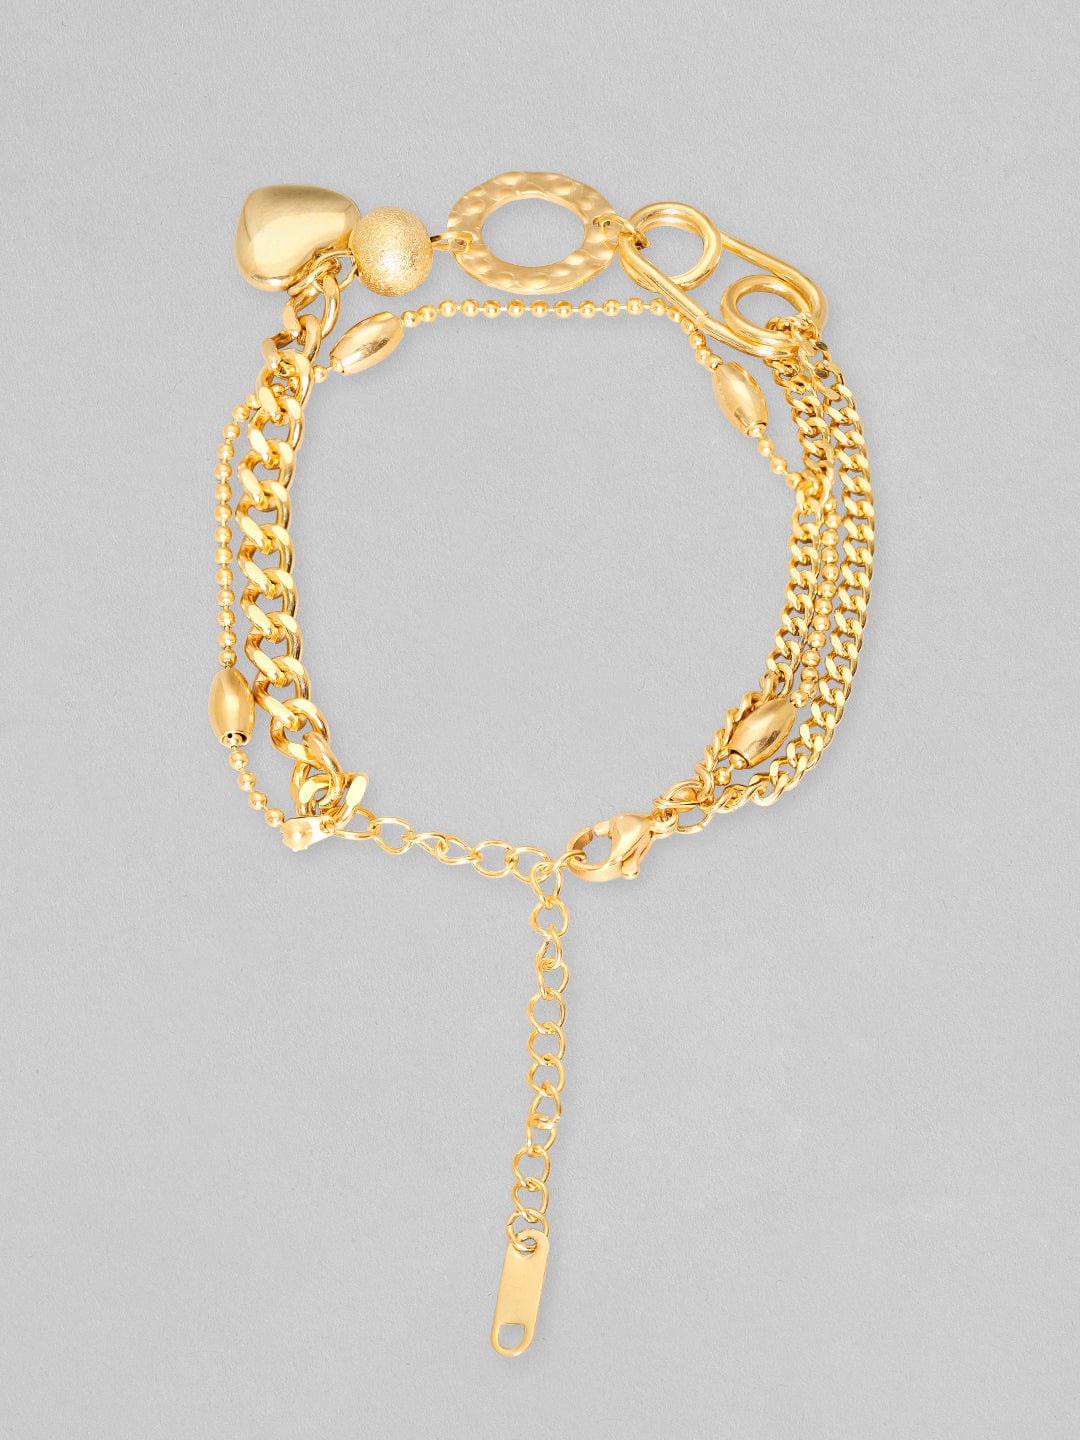 22k Gold Bracelet Chain From India, Box Style Gold Bracelet Handmade - Etsy  Finland